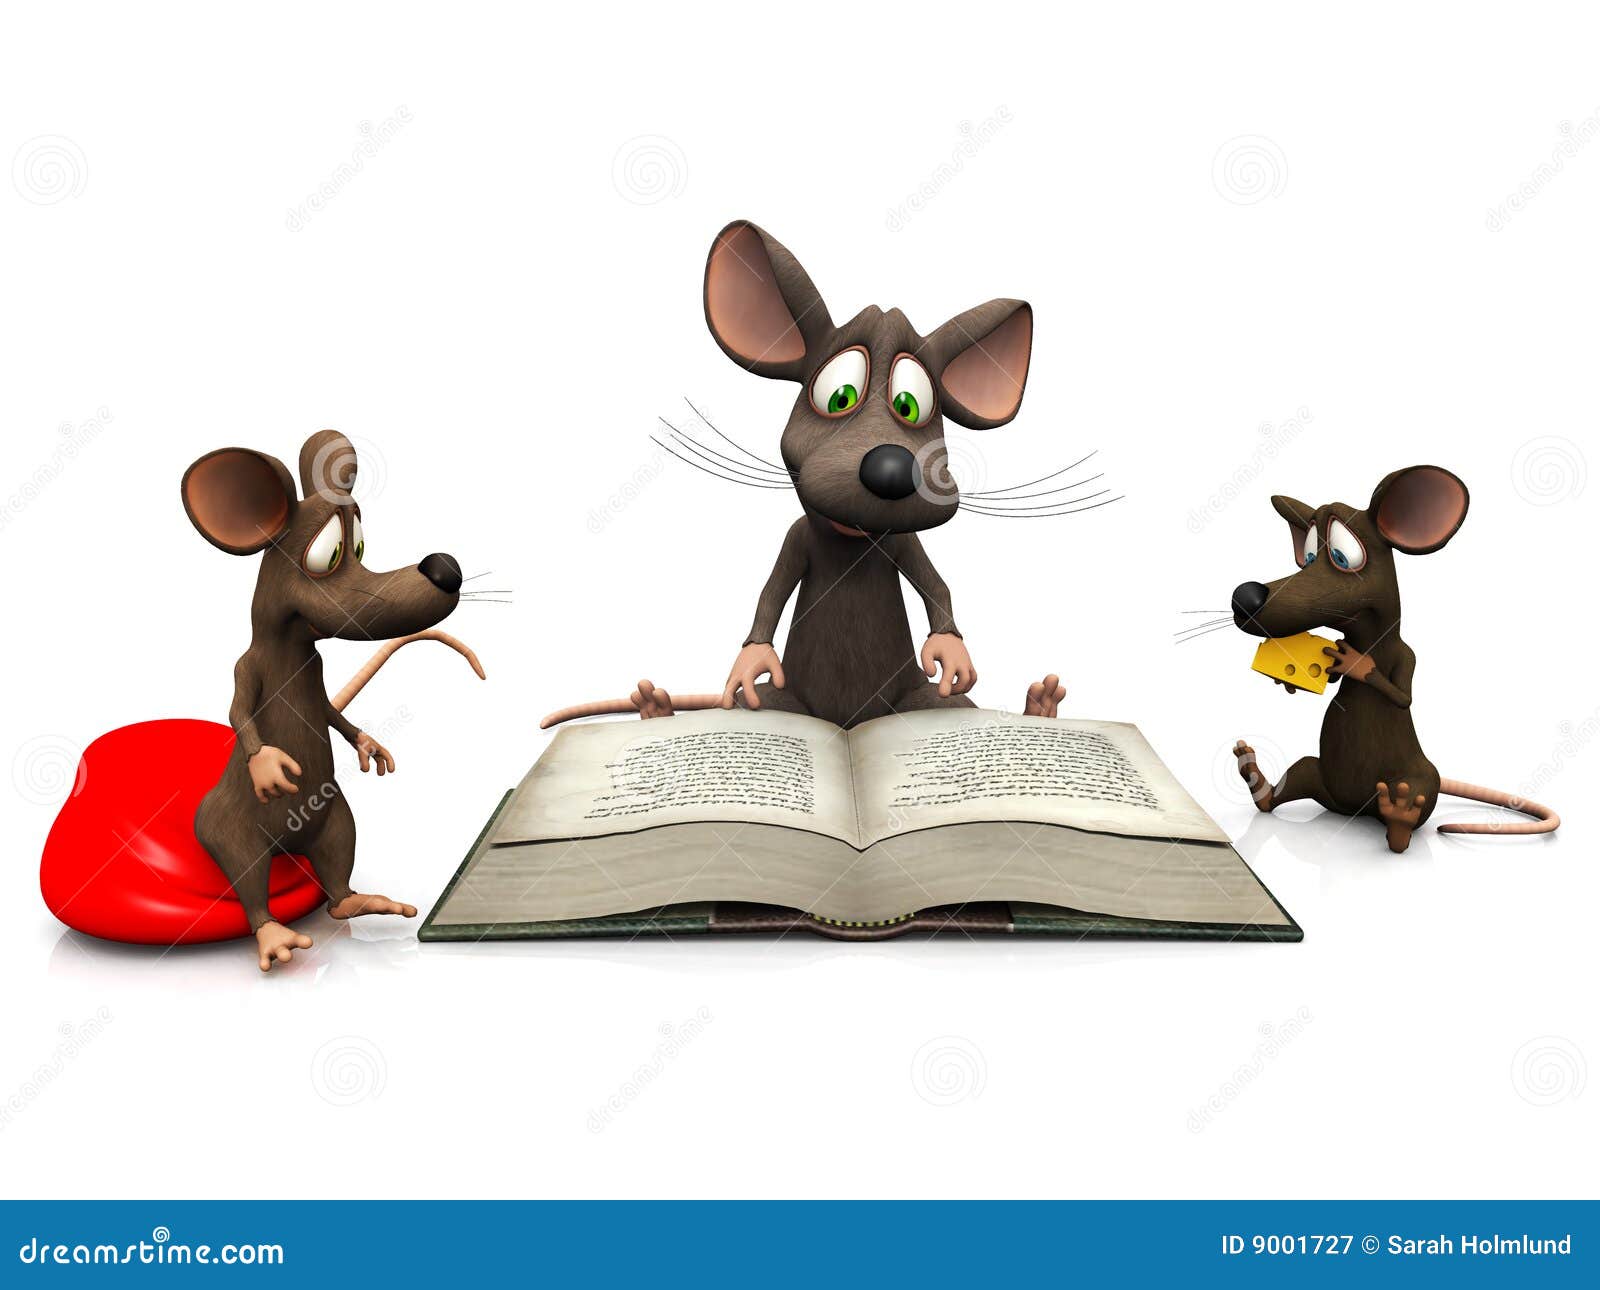 mice storytime